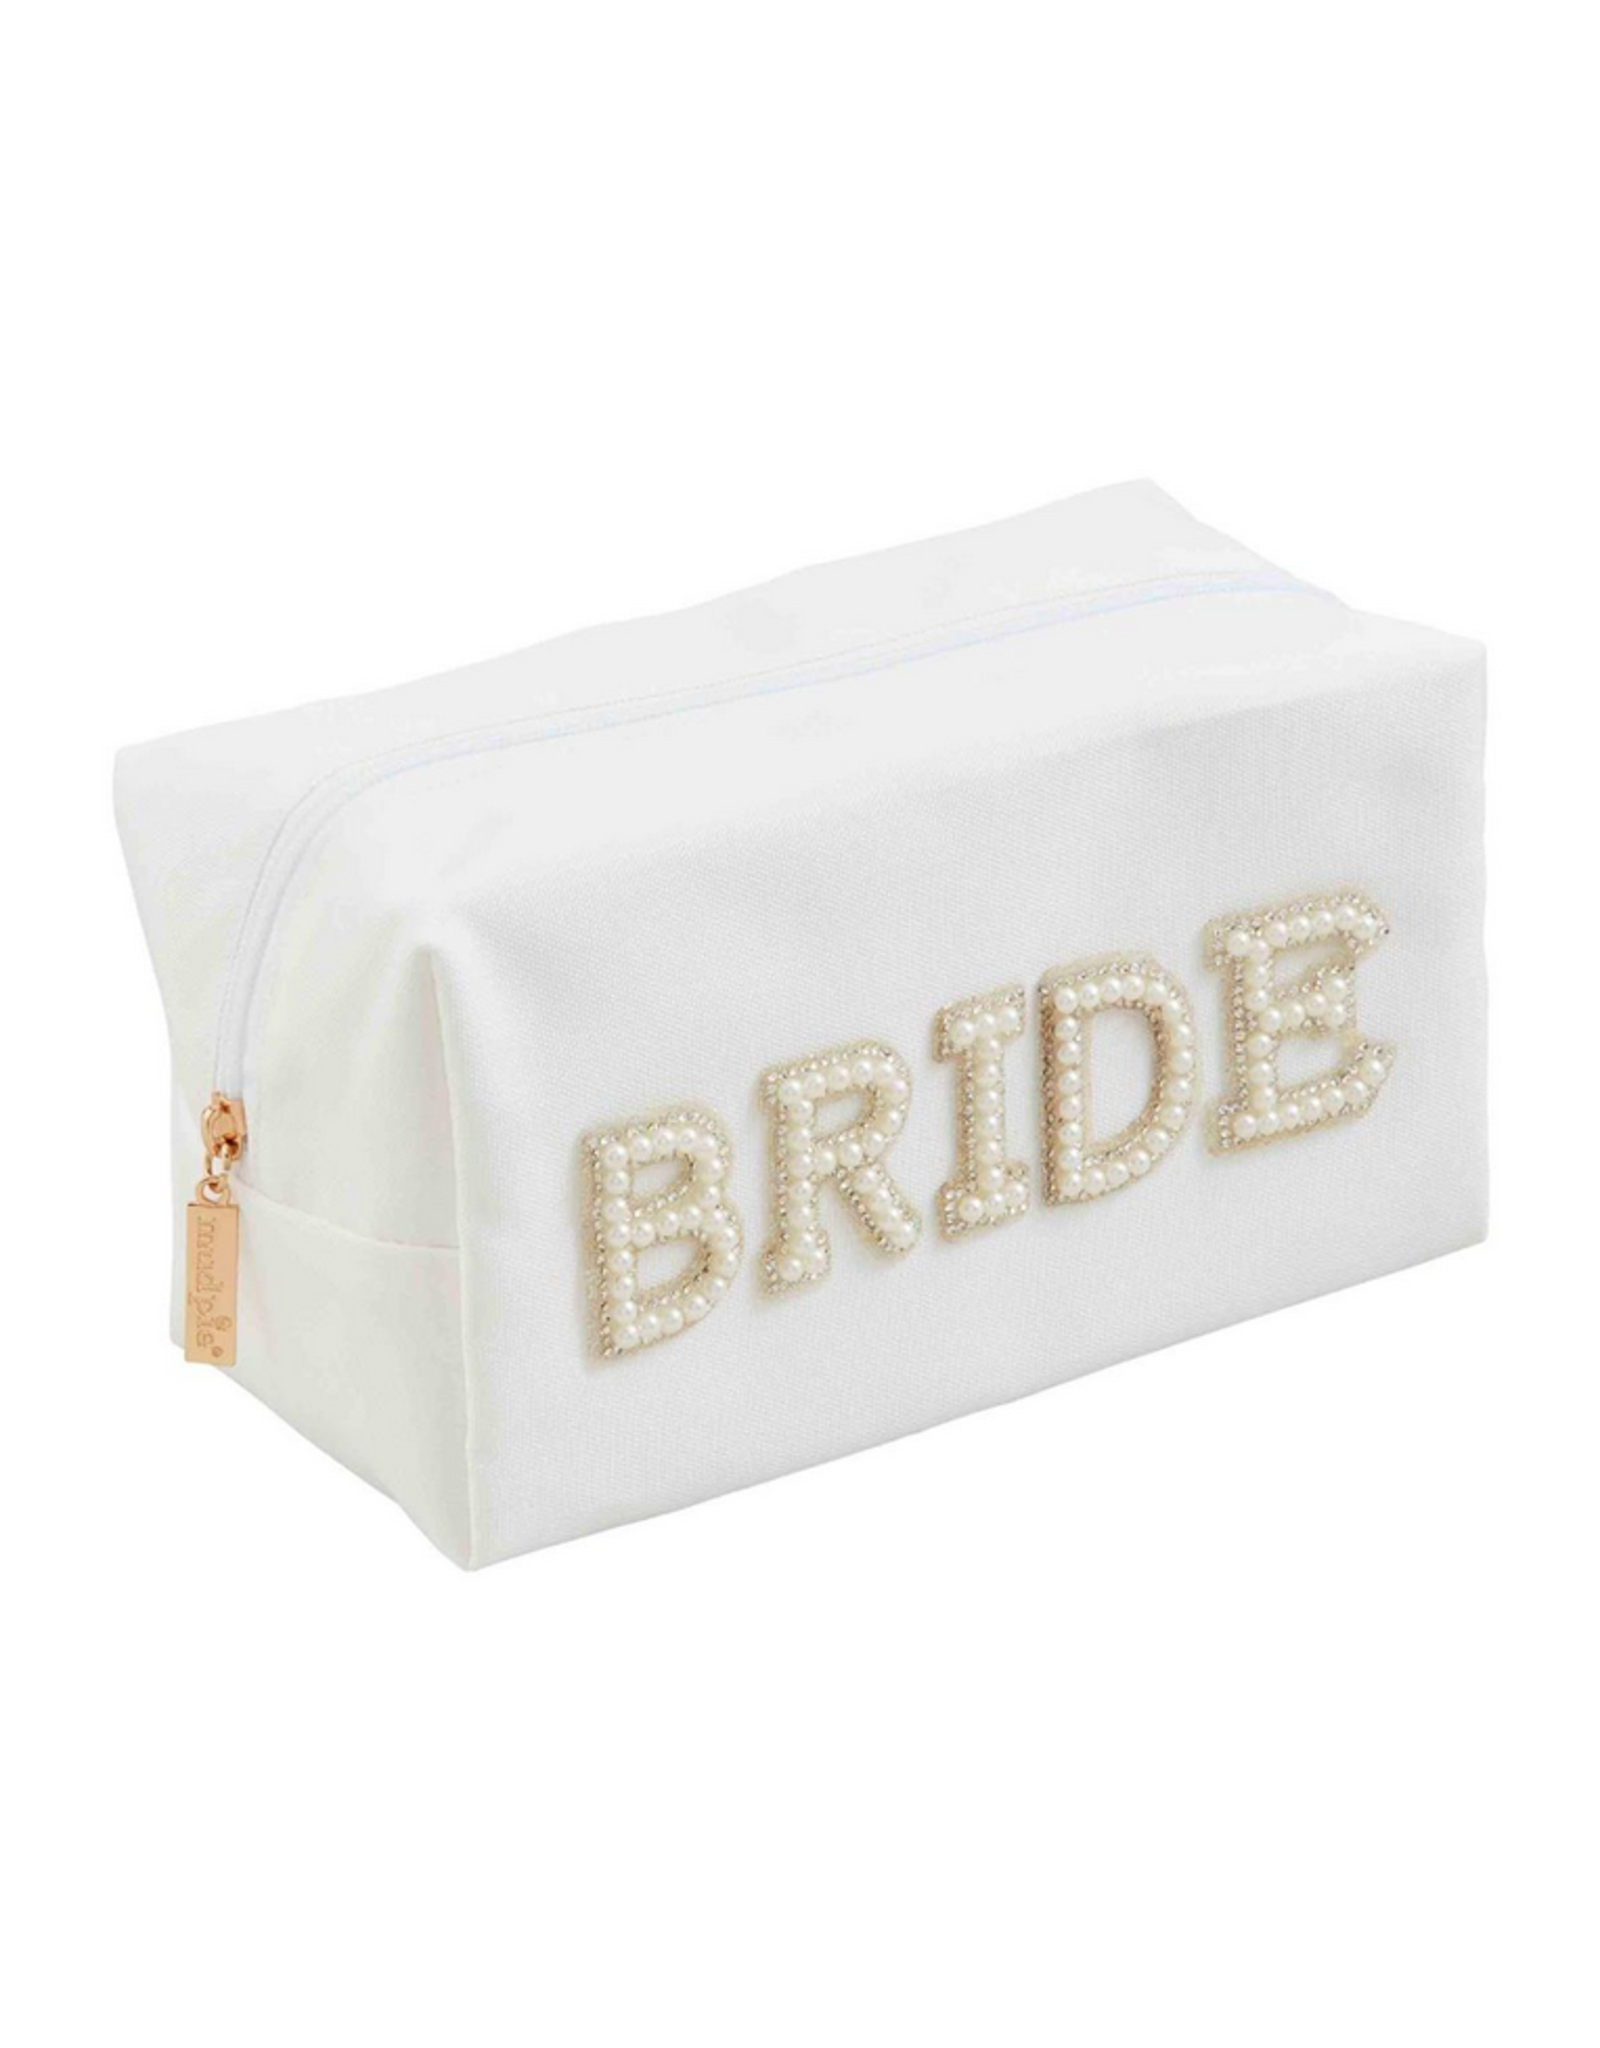 Bride Patch White Bag